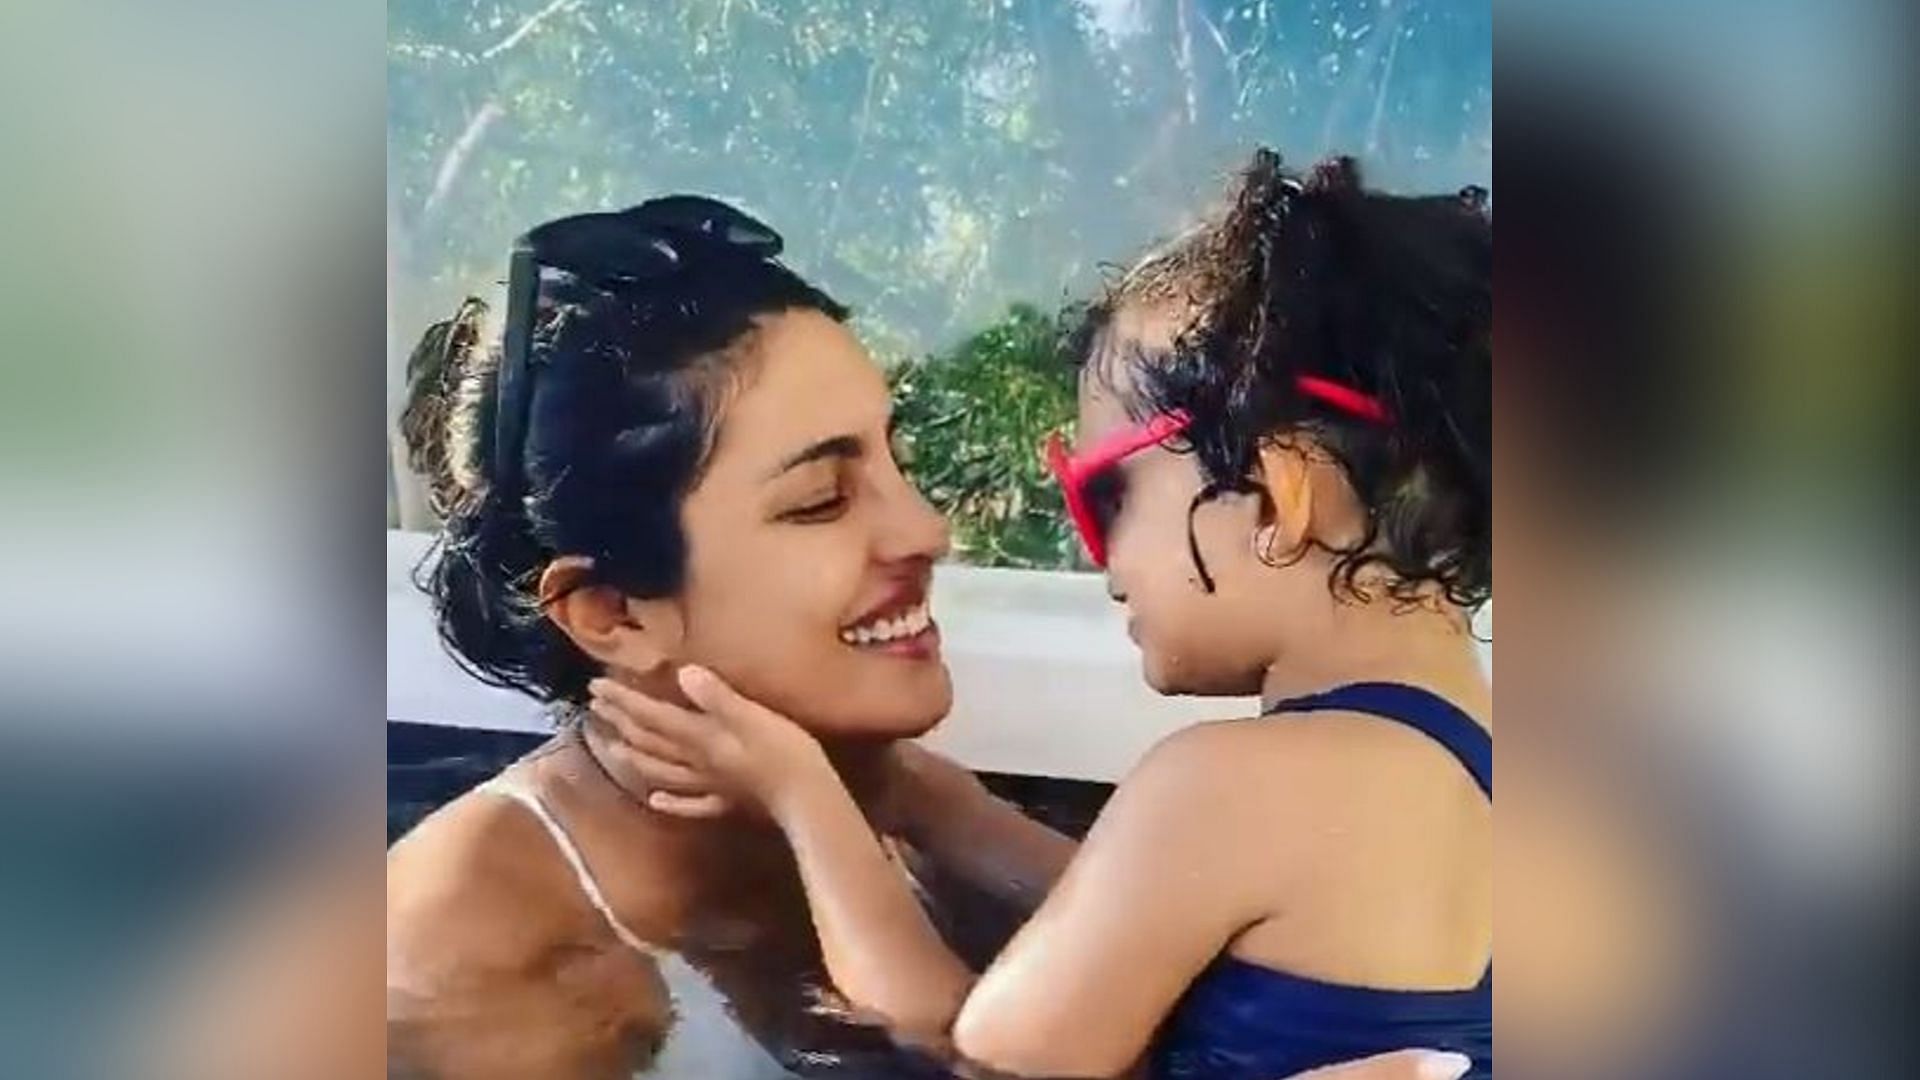 Priyanka Chopra with her niece in the video she shared.